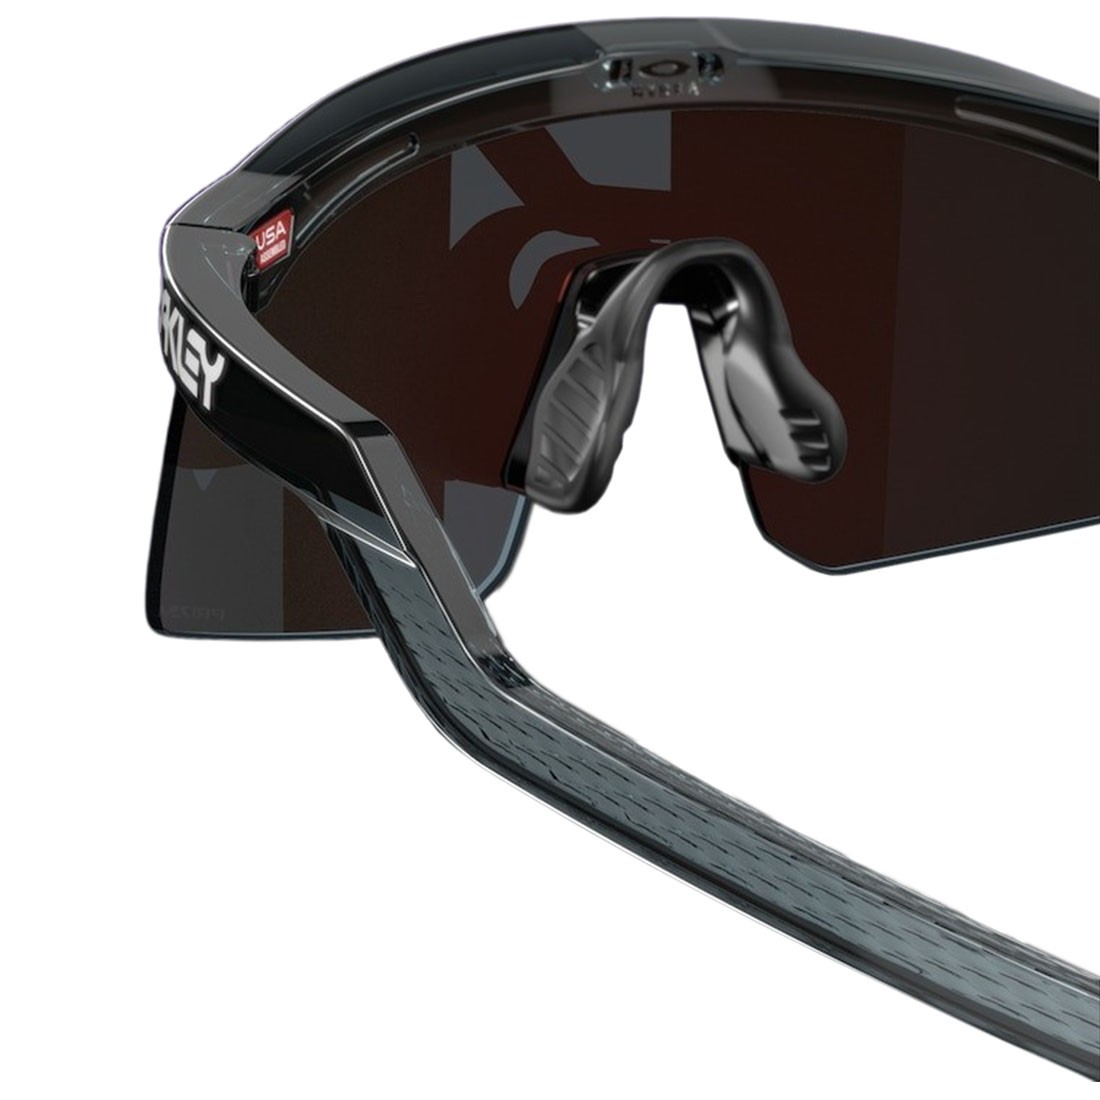 Oakley Hydra Prizm Violet Lenses, Crystal Black Frame Sunglasses | Oakley®